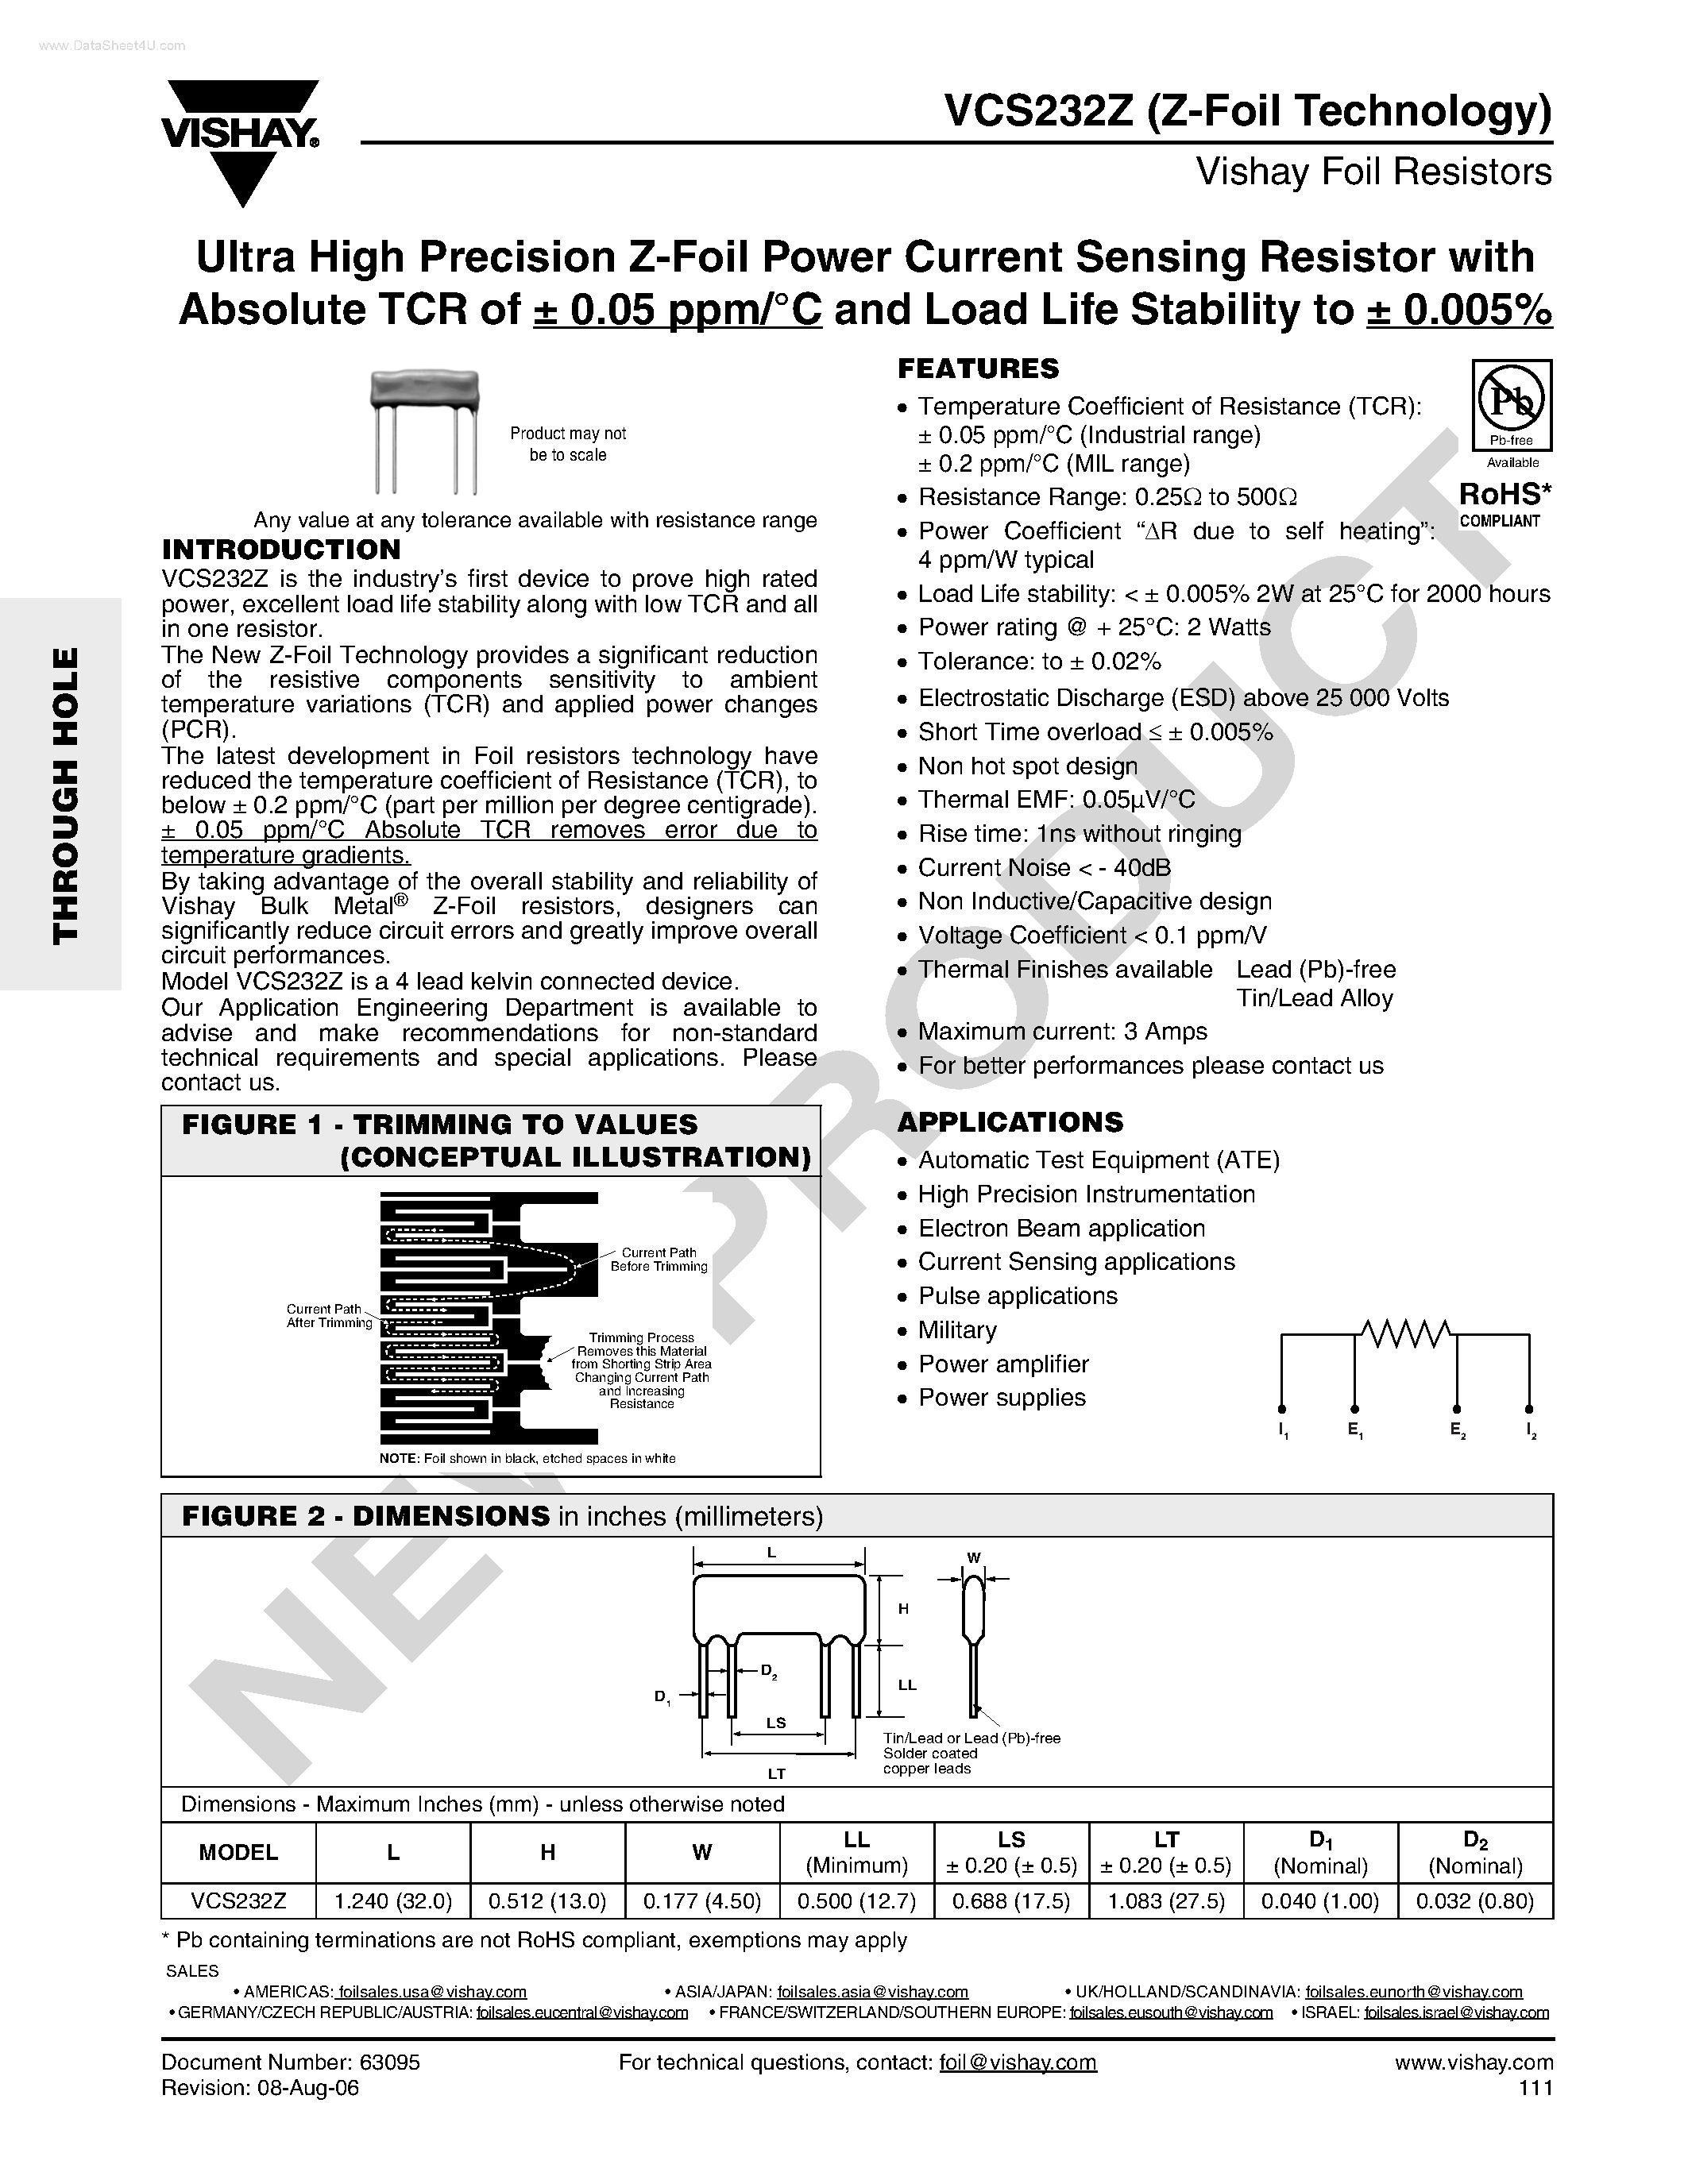 Datasheet VCS232Z - Ultra High Precision Z-Foil Power Current Sensing Resistor page 1